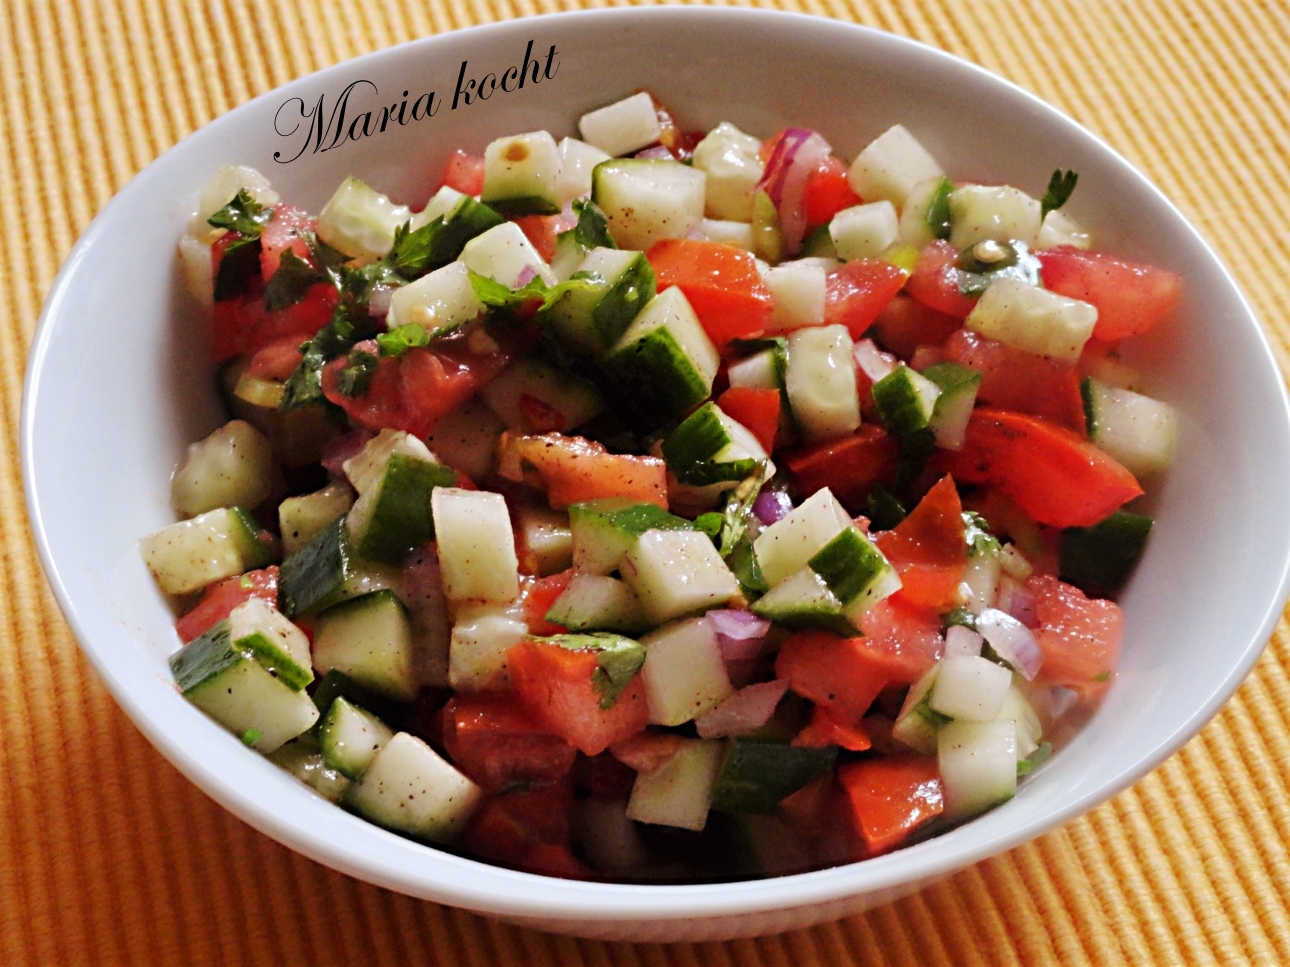 Maria kocht: Indischer gemischter Salat / Indiai saláta